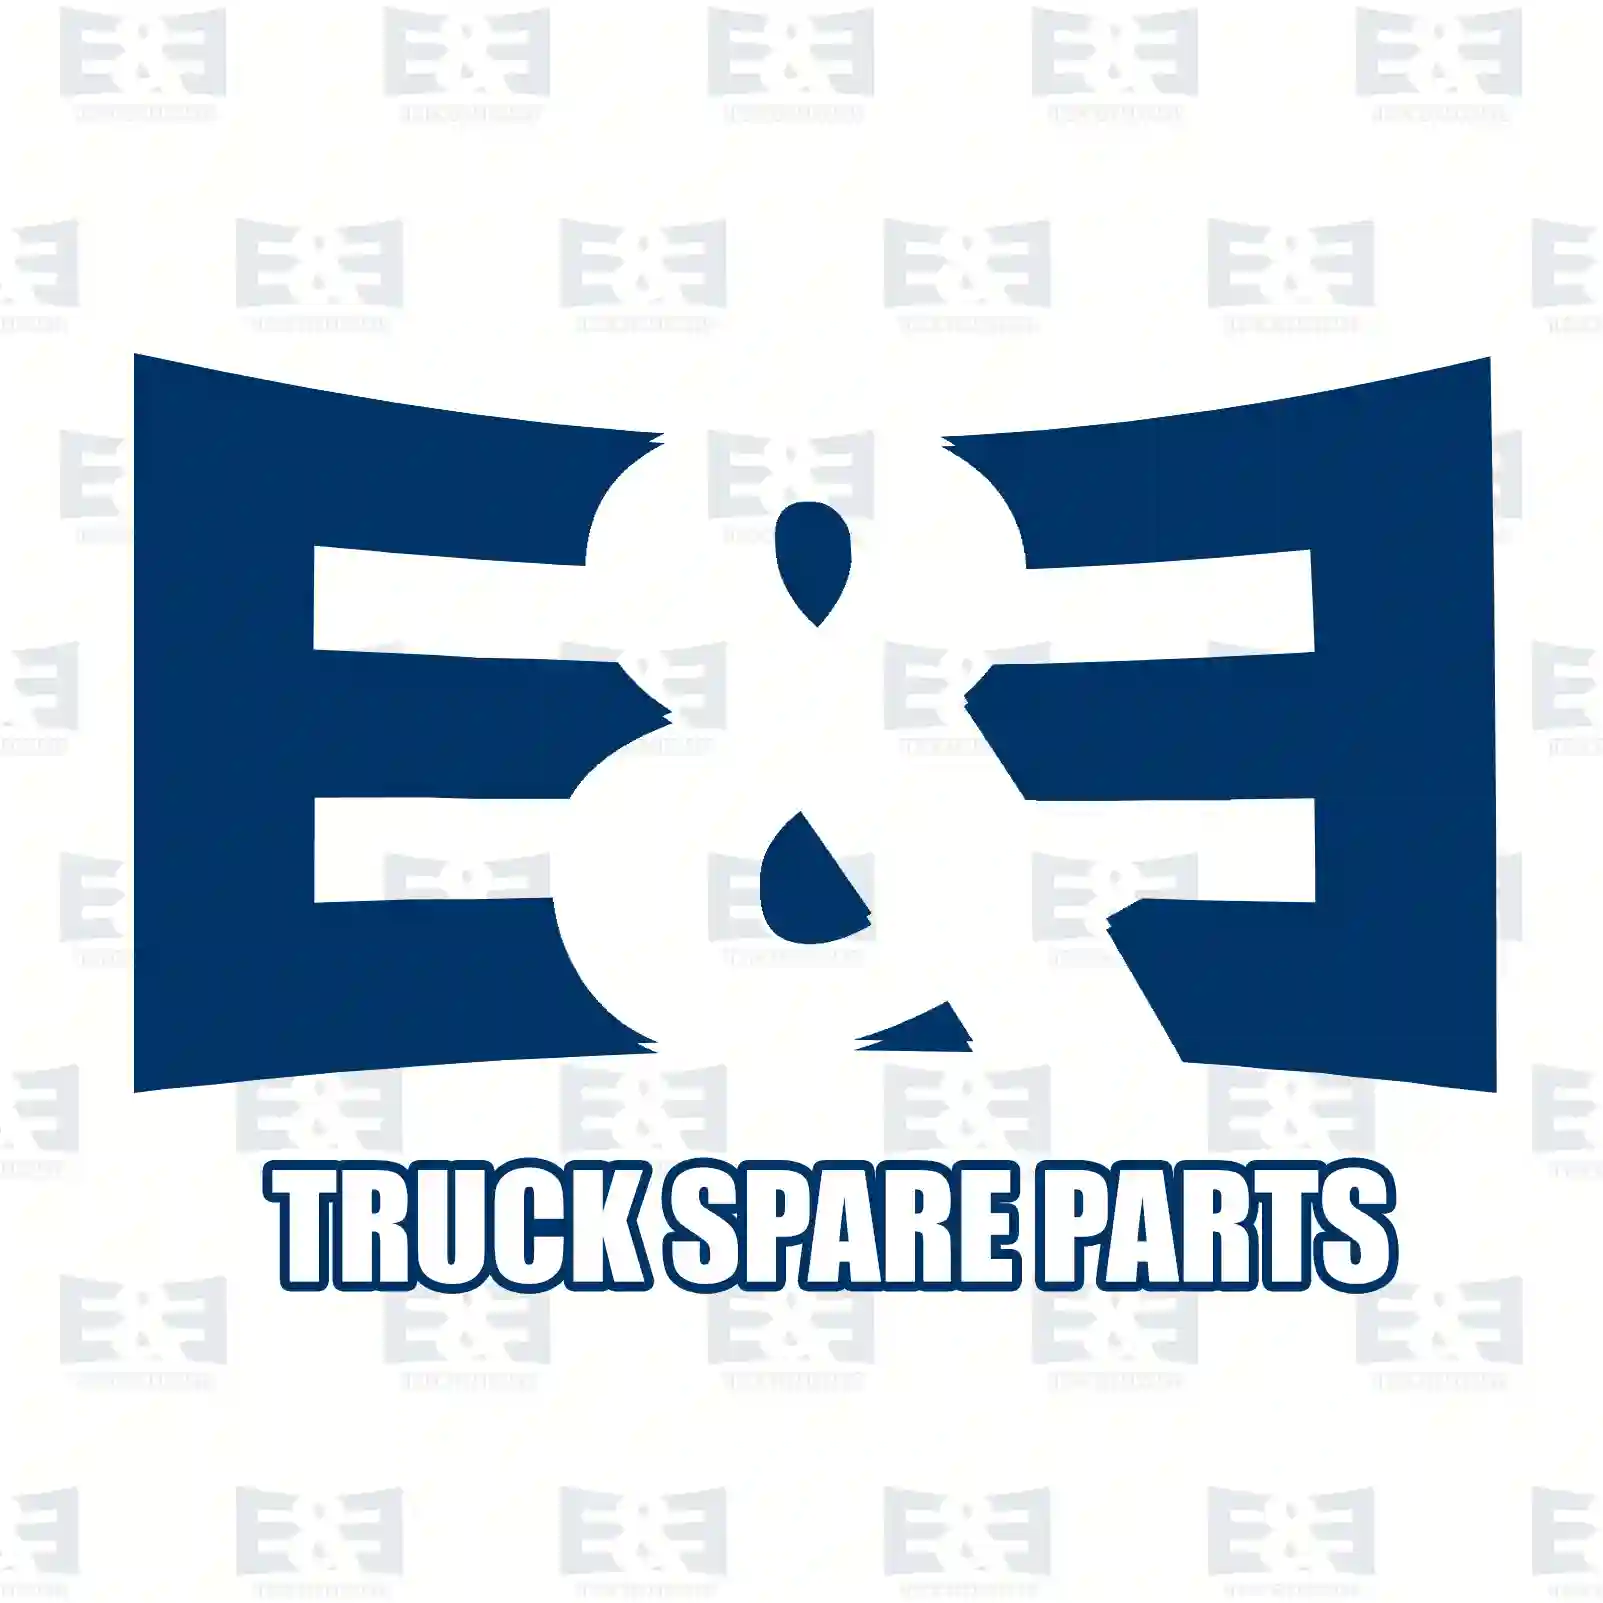 Dosing module, urea, 2E2286753, 7420766863, 74209 ||  2E2286753 E&E Truck Spare Parts | Truck Spare Parts, Auotomotive Spare Parts Dosing module, urea, 2E2286753, 7420766863, 74209 ||  2E2286753 E&E Truck Spare Parts | Truck Spare Parts, Auotomotive Spare Parts